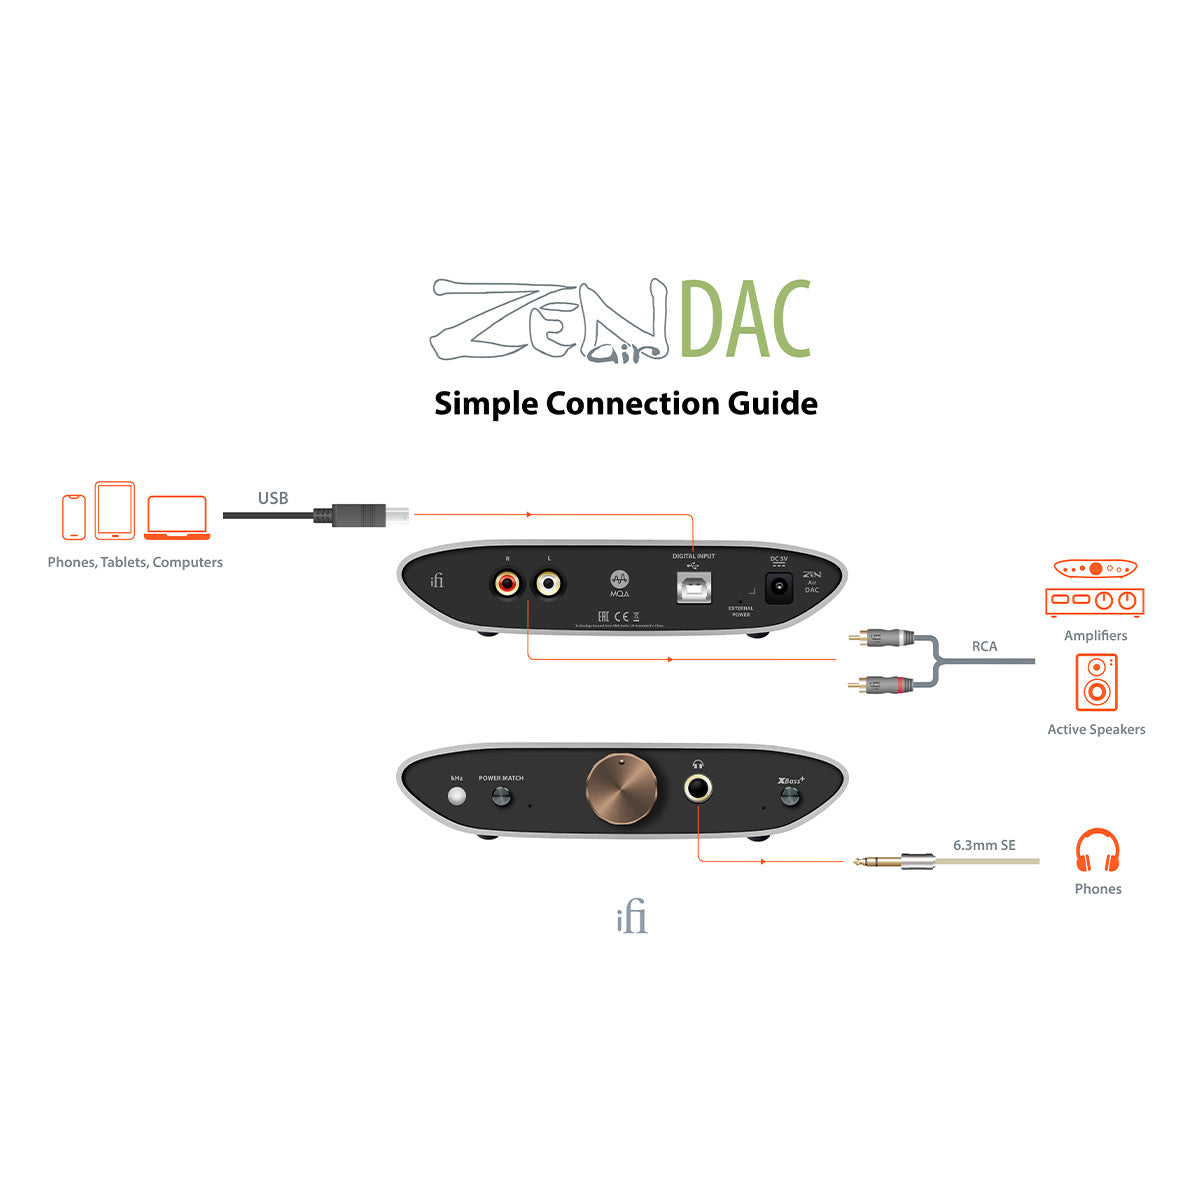 iFi Audio ZEN Air DAC Hi-res Desktop USB DAC and Headphone Amp